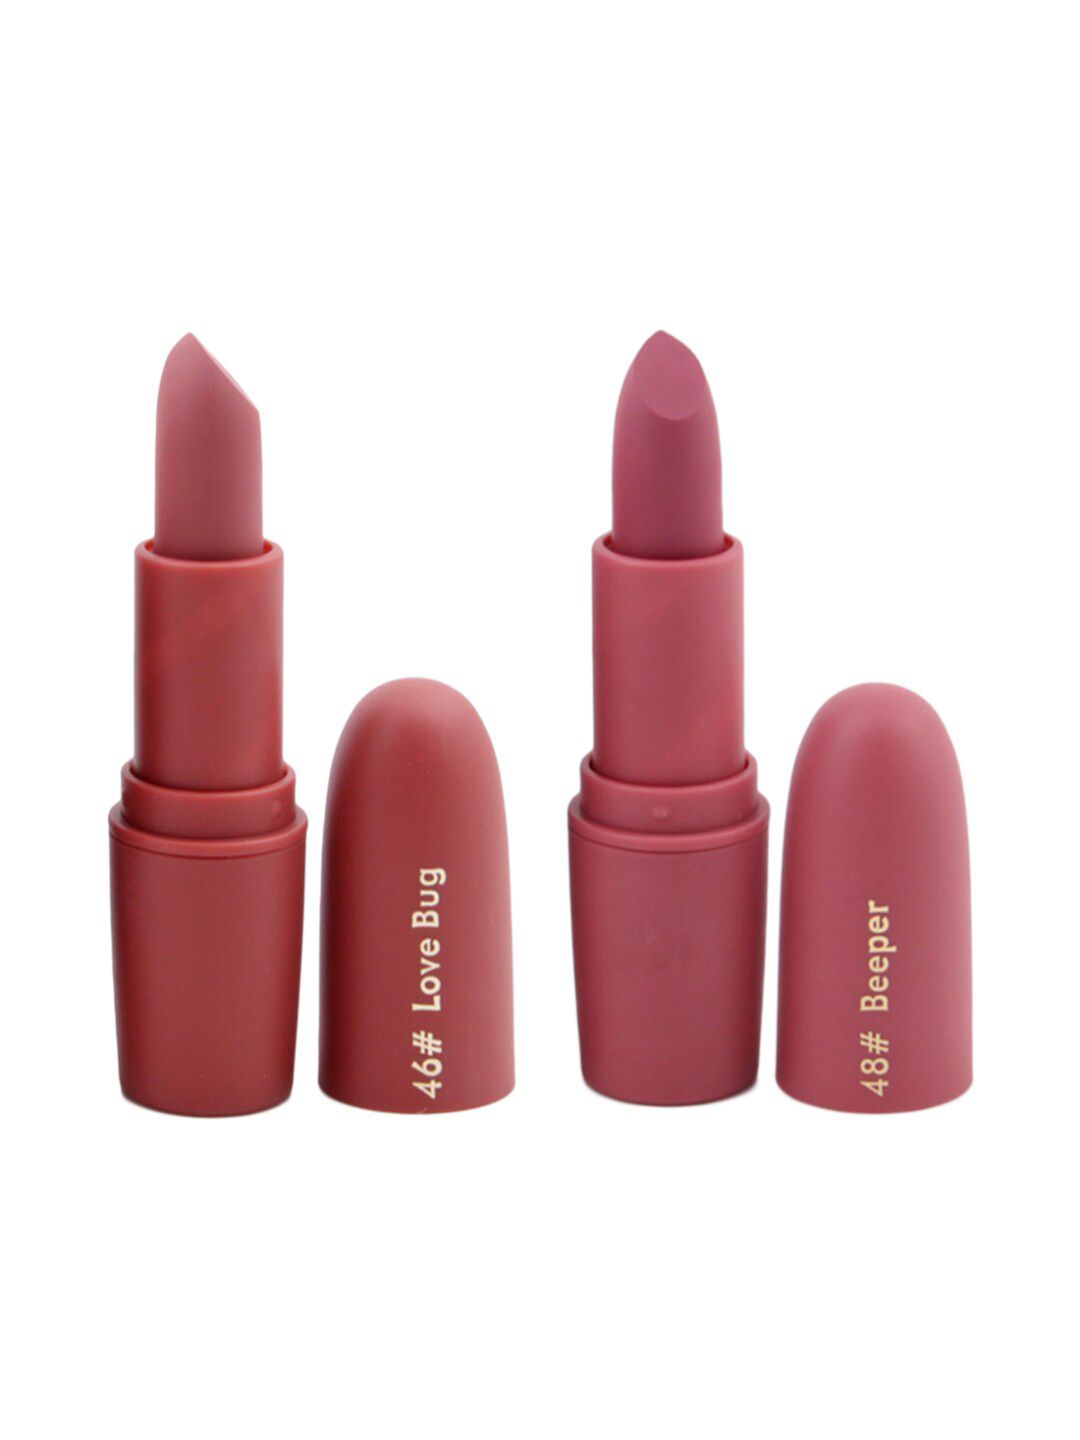 MISS ROSE Professional Make-Up Set of 2 Matte Creamy Lipsticks - Love Bug 46 & Beeper 48 Price in India